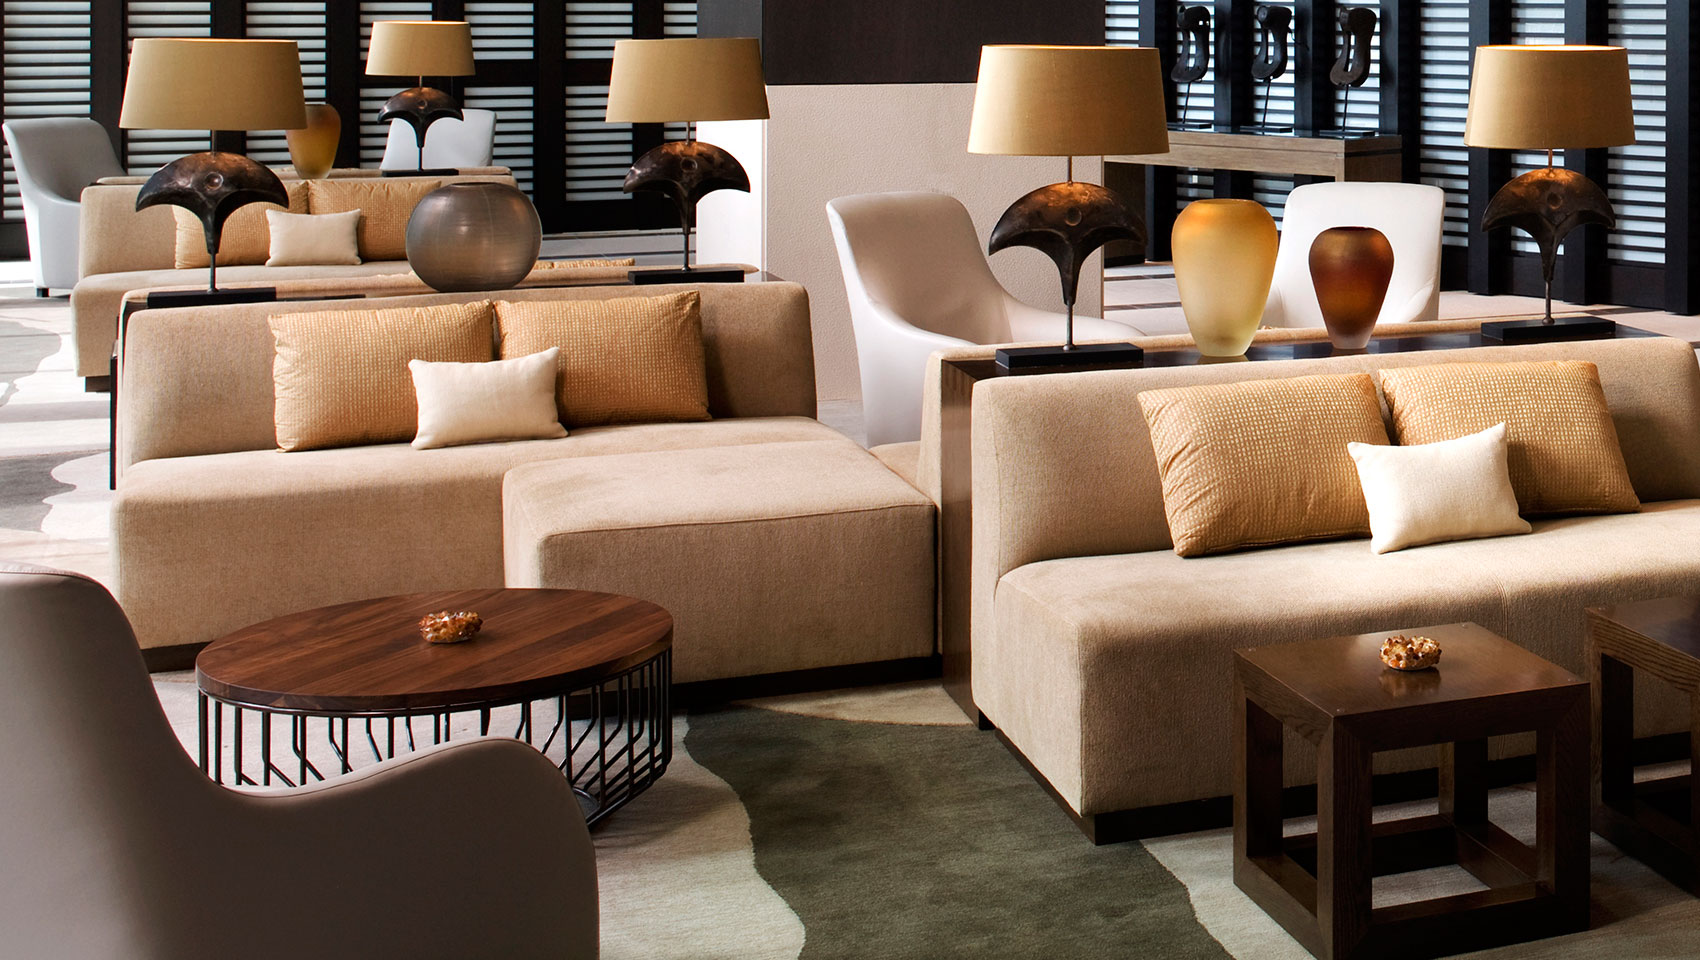 Marriott Hotels & Suites lobby space